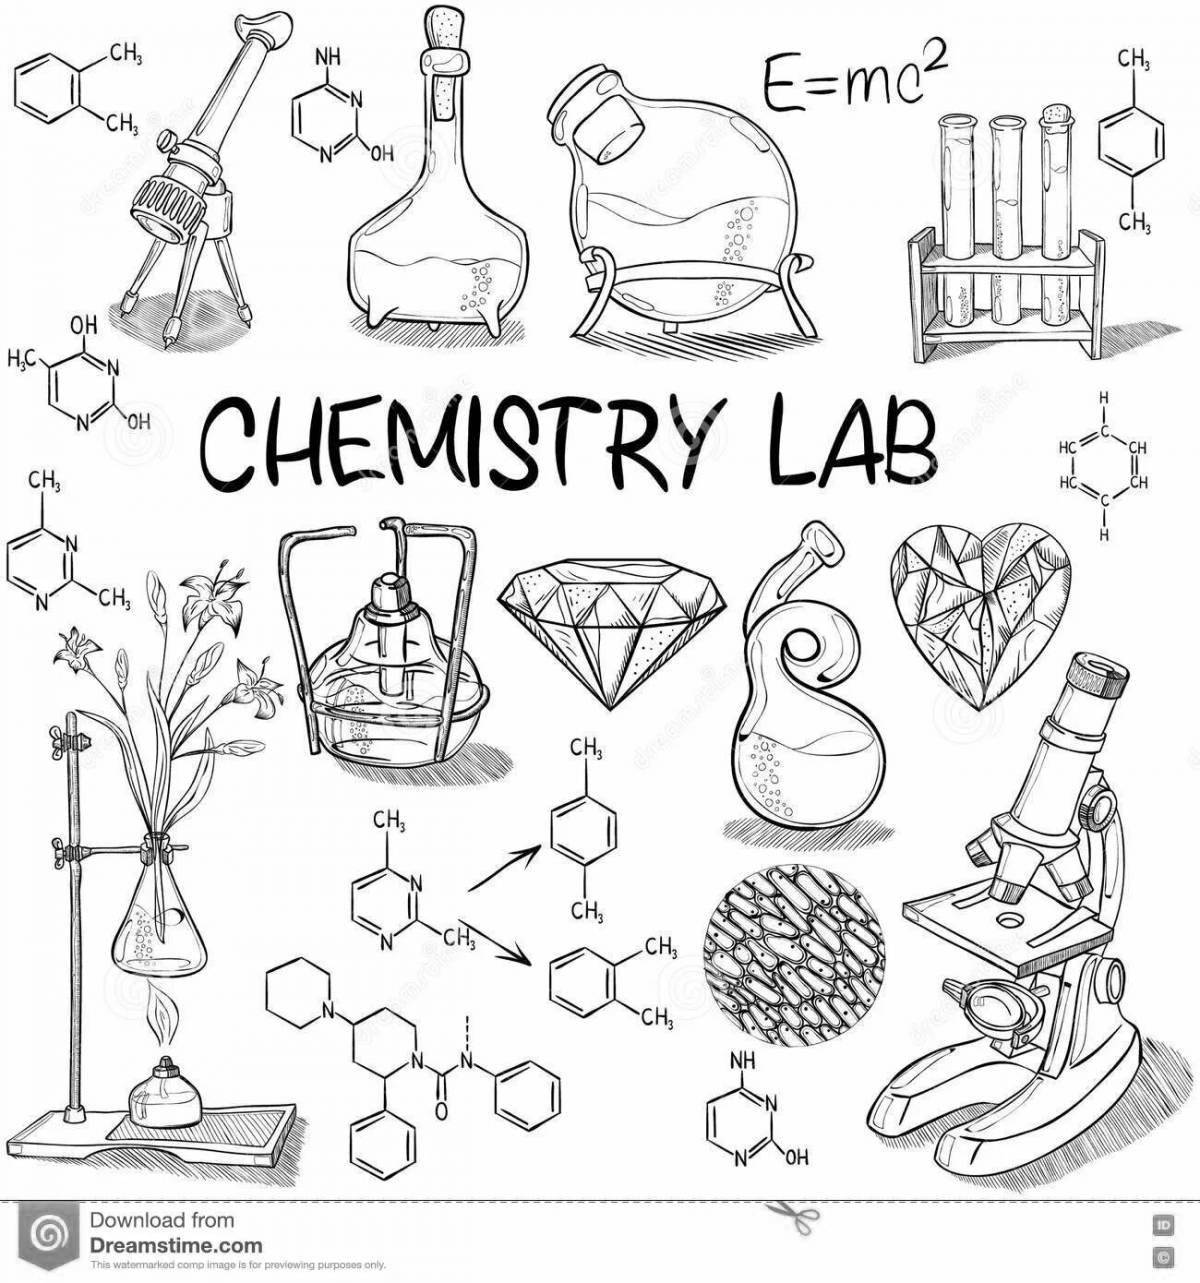 Chemistry lab #4